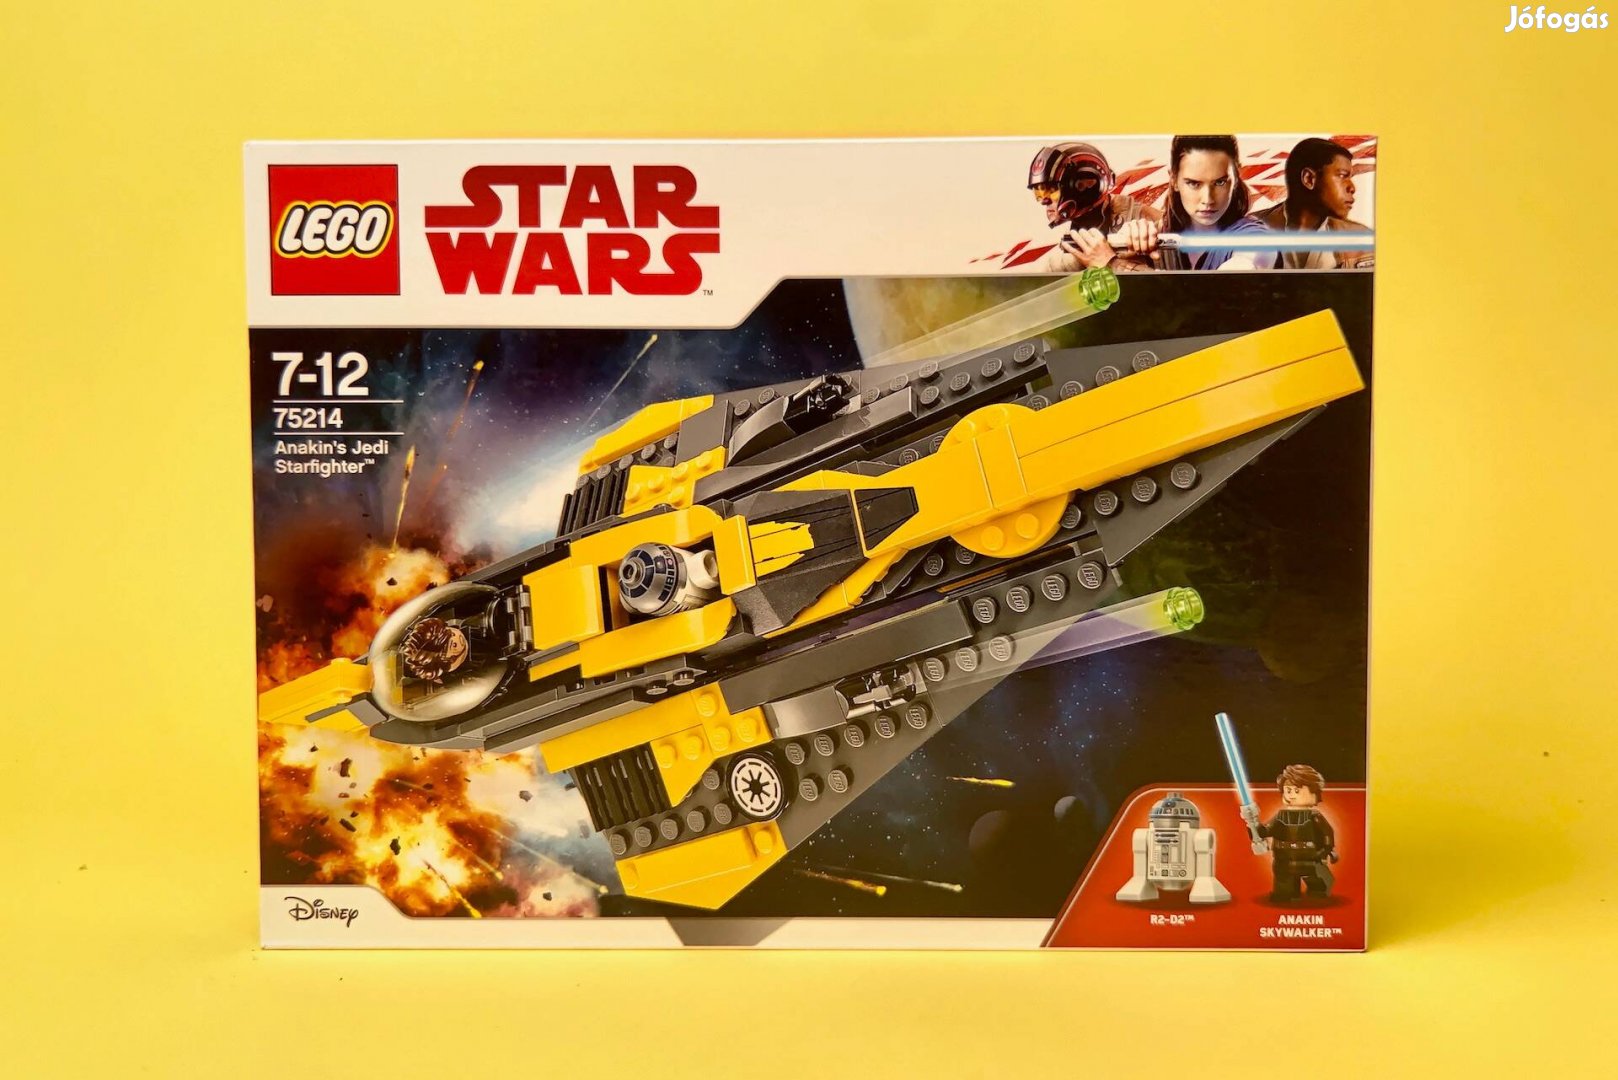 LEGO Star Wars 75214 Anakin's Jedi Starfighter, Új, Bontatlan